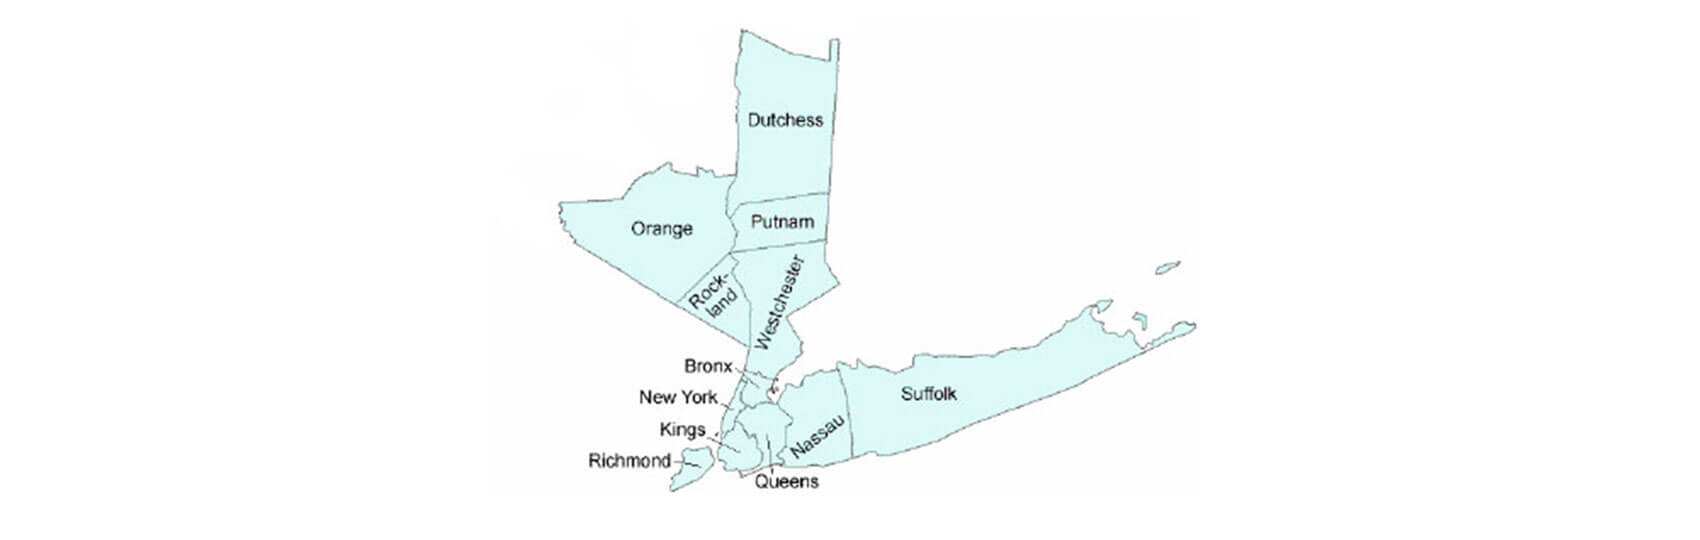 Regions 1 through 3 of New York State